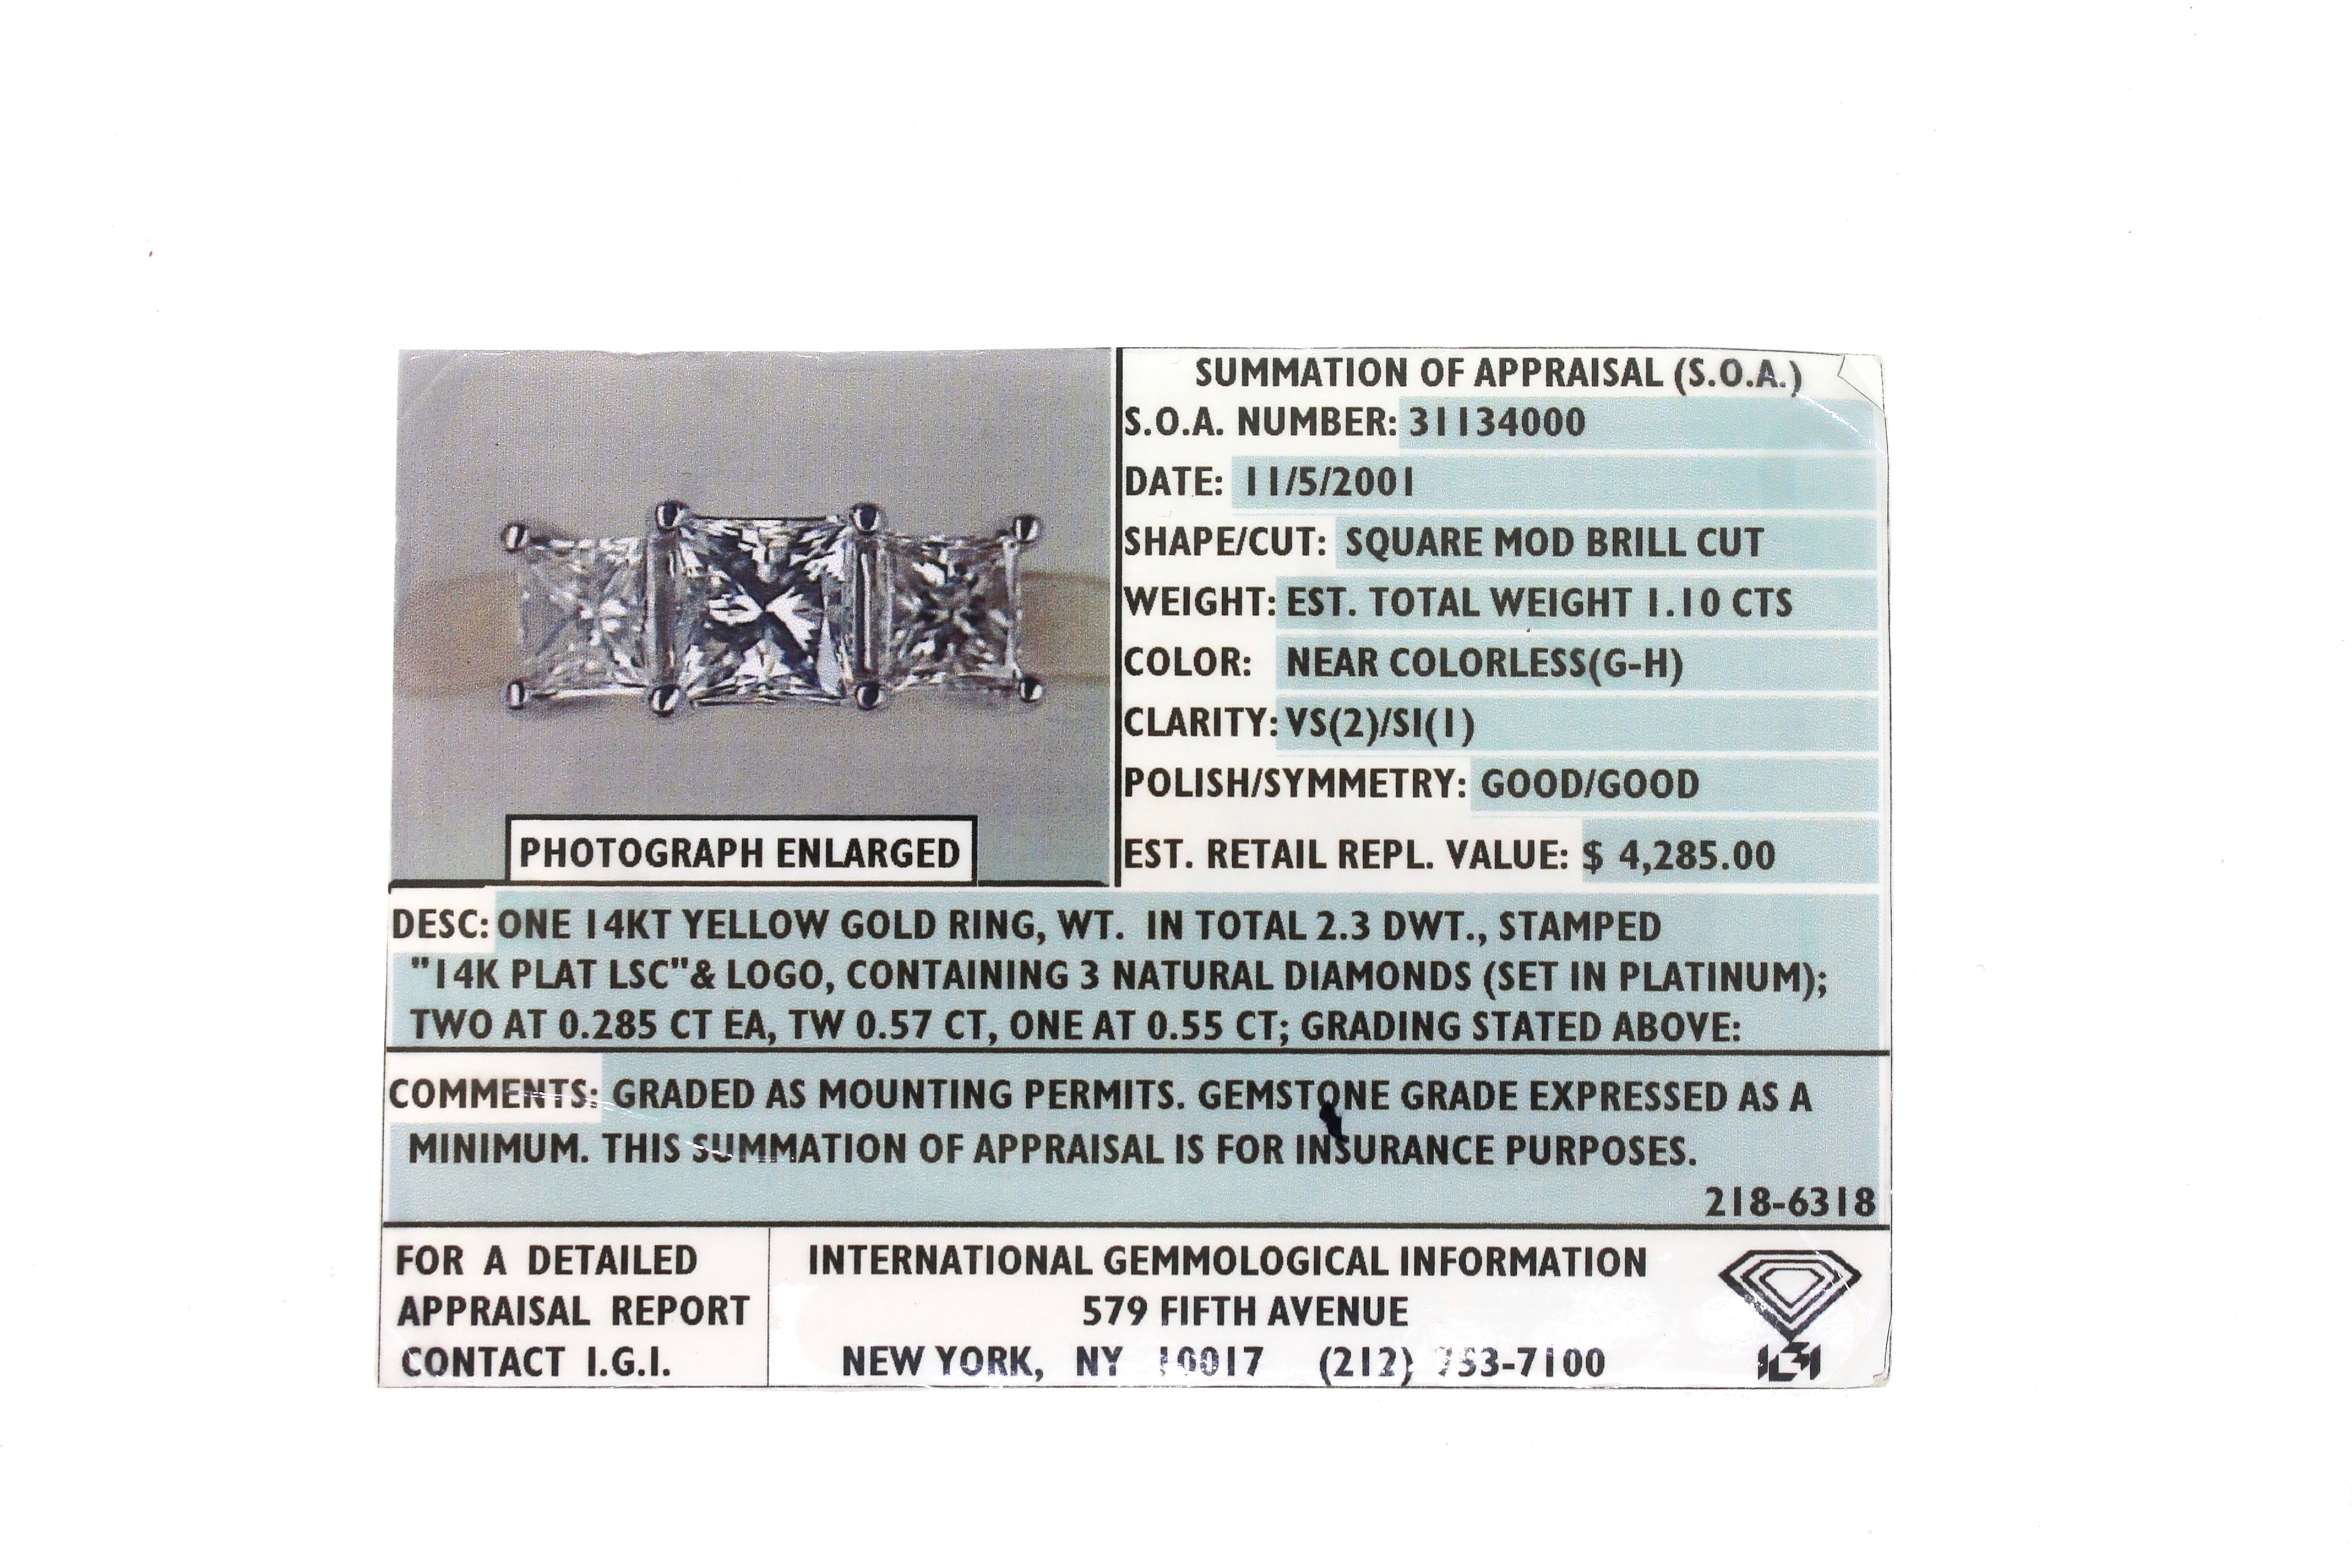 14K White Gold Princess Cut Three Stone 1.10CTW  Diamond Engagement Ring Size 6